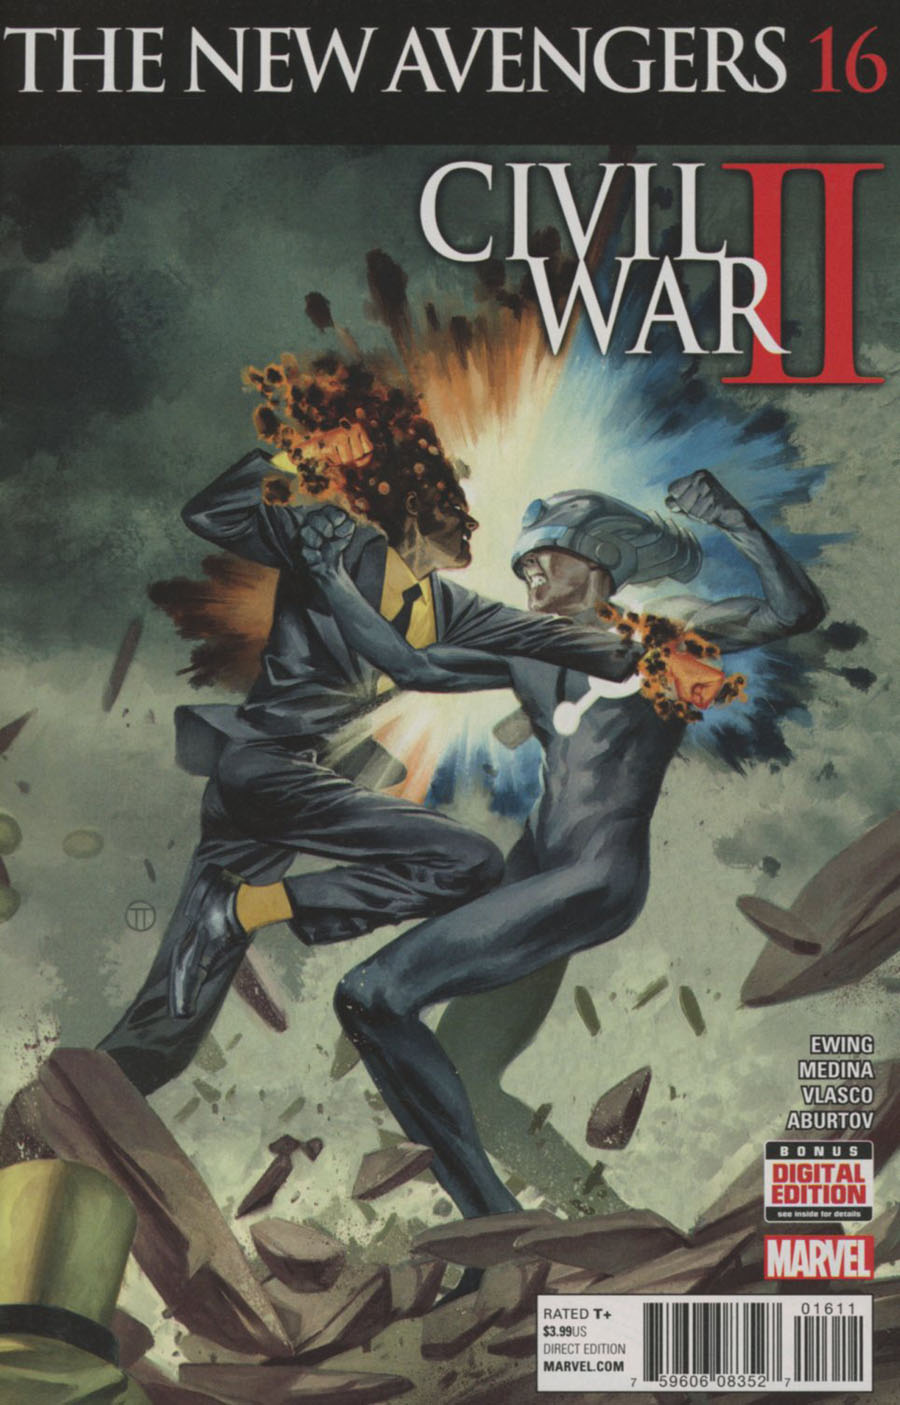 New Avengers Vol 4 #16 (Civil War II Tie-In)